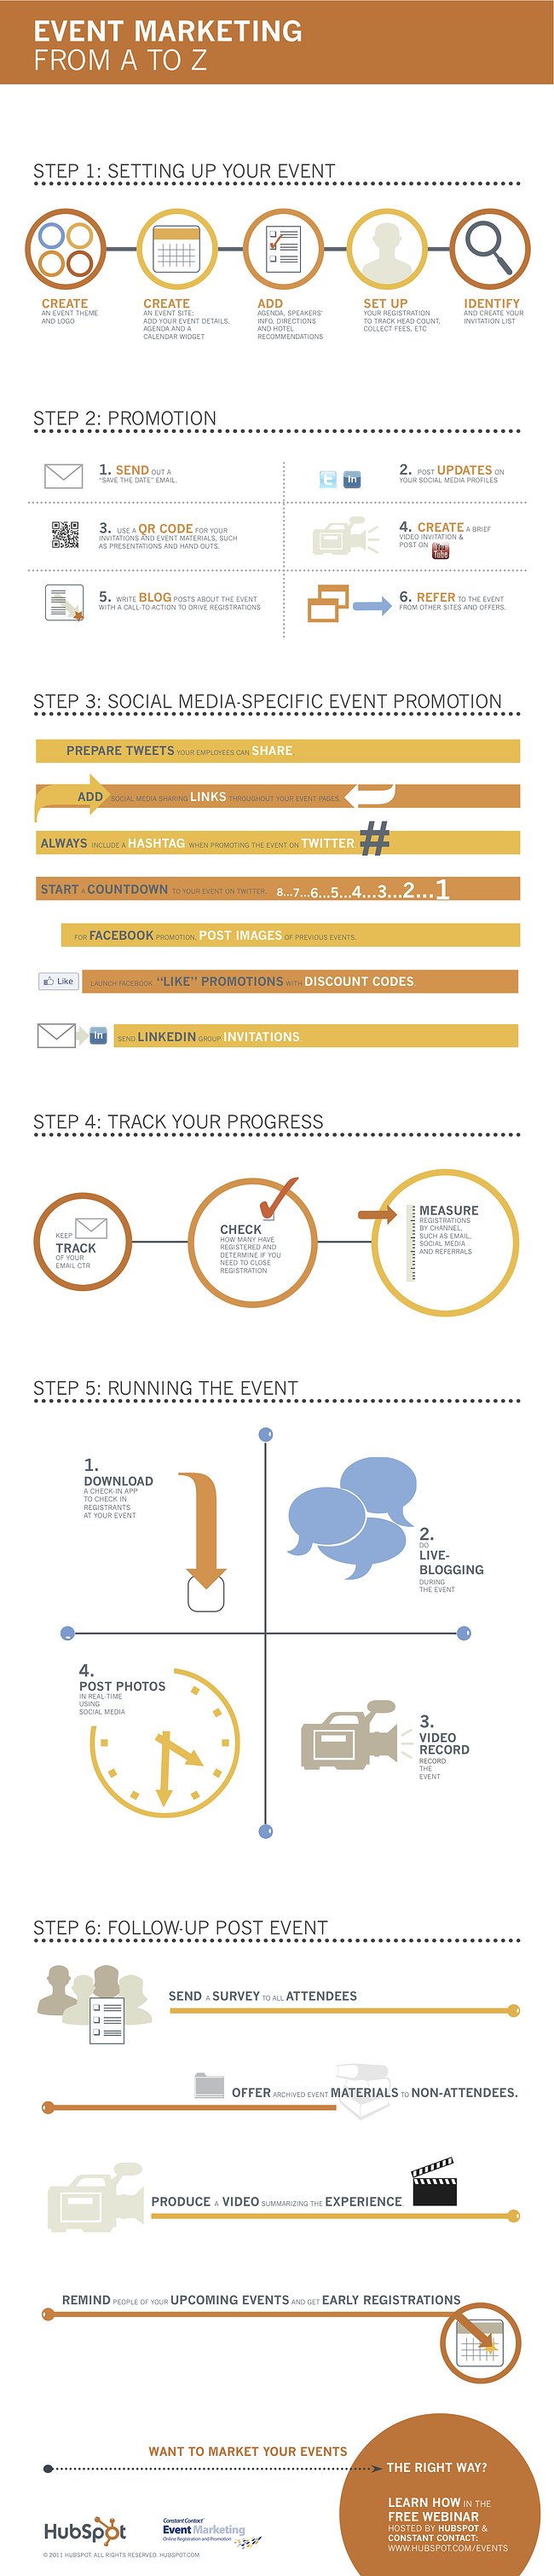 Event Marketing Infographic